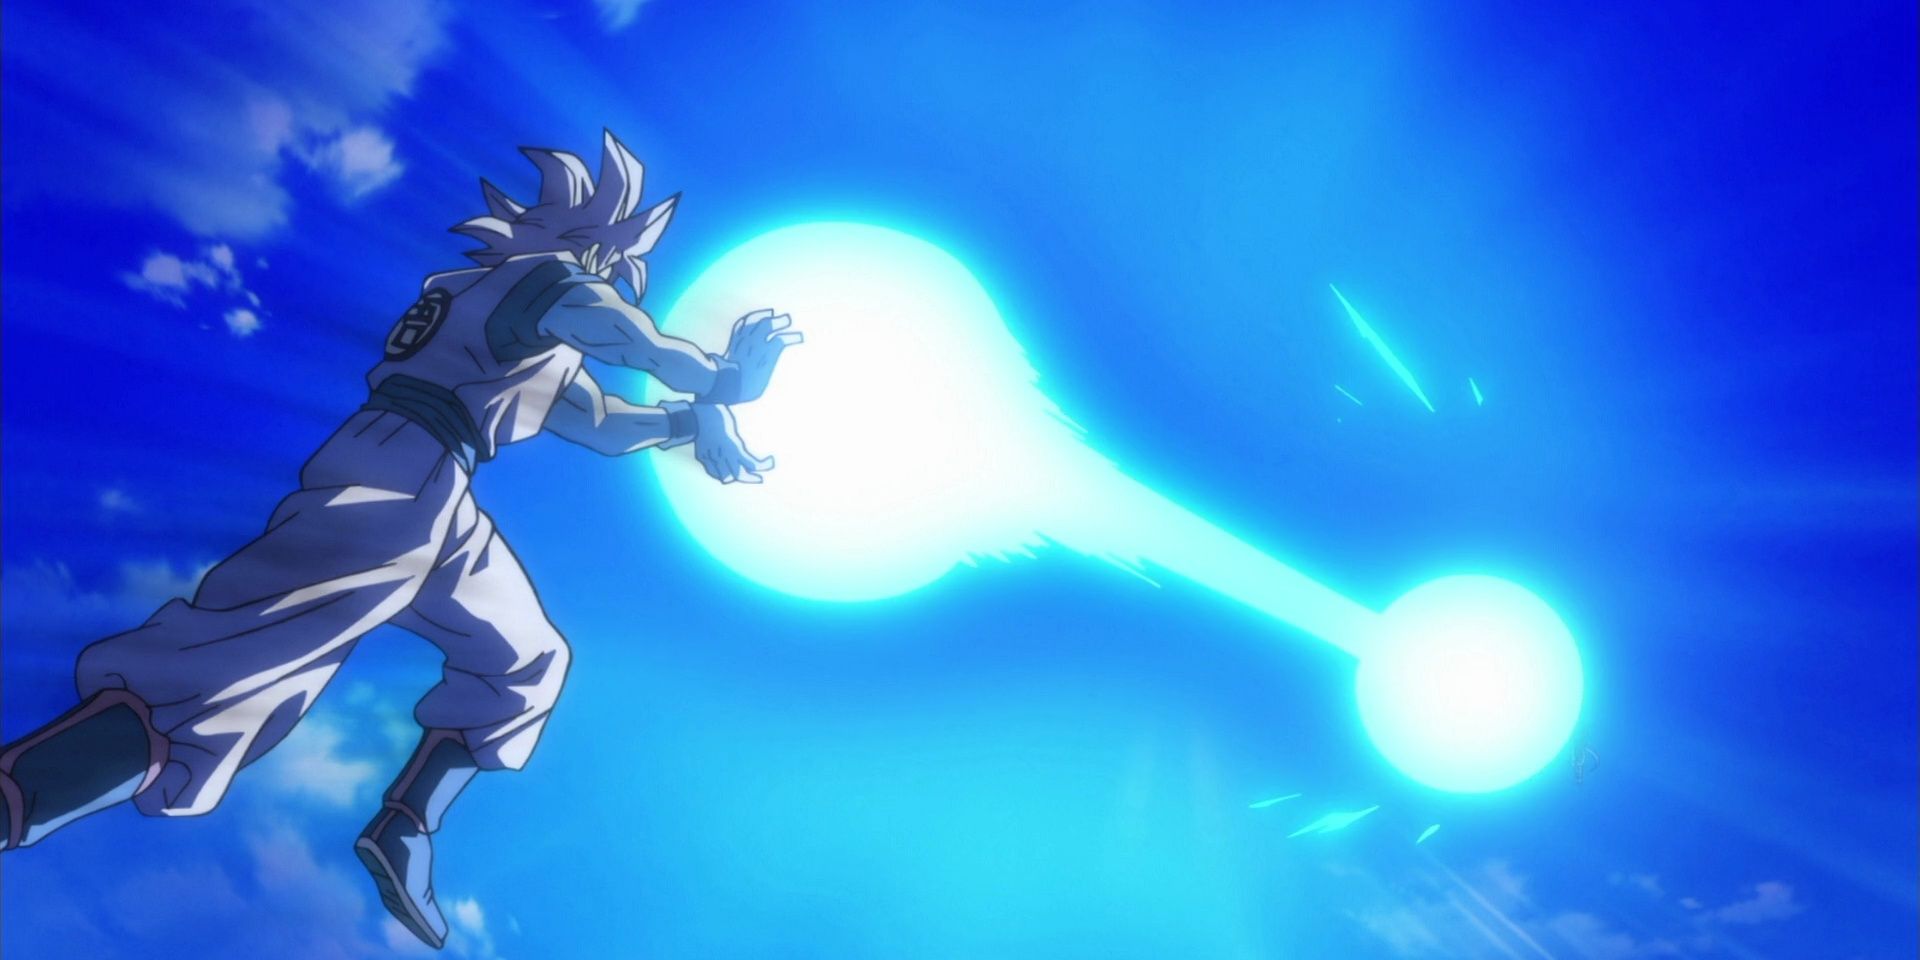 Bakarott on X: BLUE GOKU #Dragonball #Goku #kamehameha